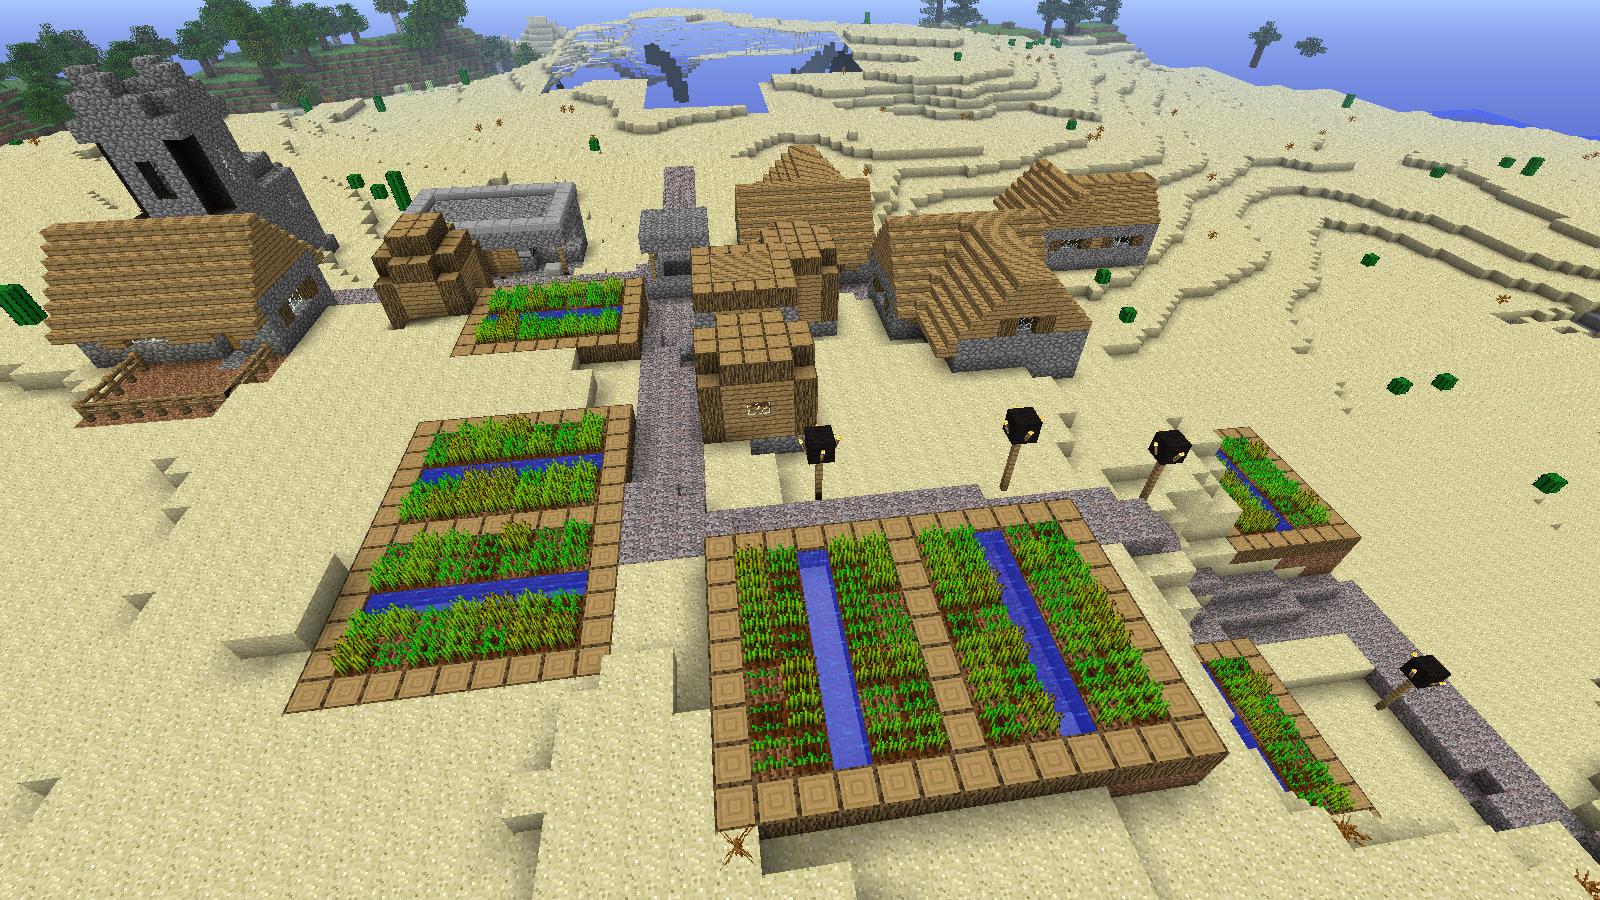 What is the title of this picture ? Image - Minecraft Desert Village.jpg | Minecraft Wiki | FANDOM powered